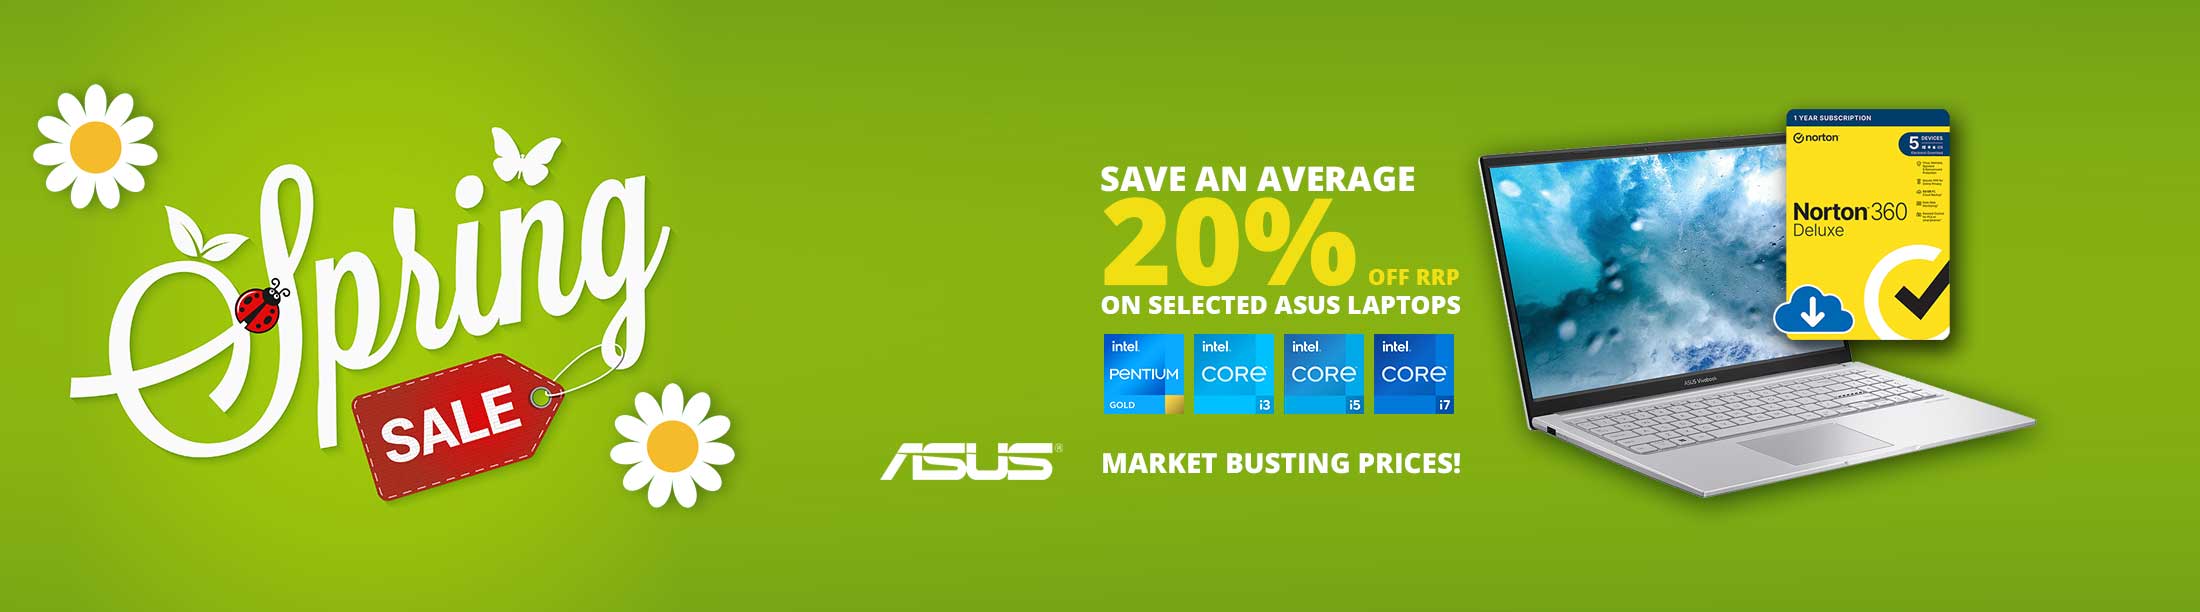 MESH Spring ASUS Laptop Deals.